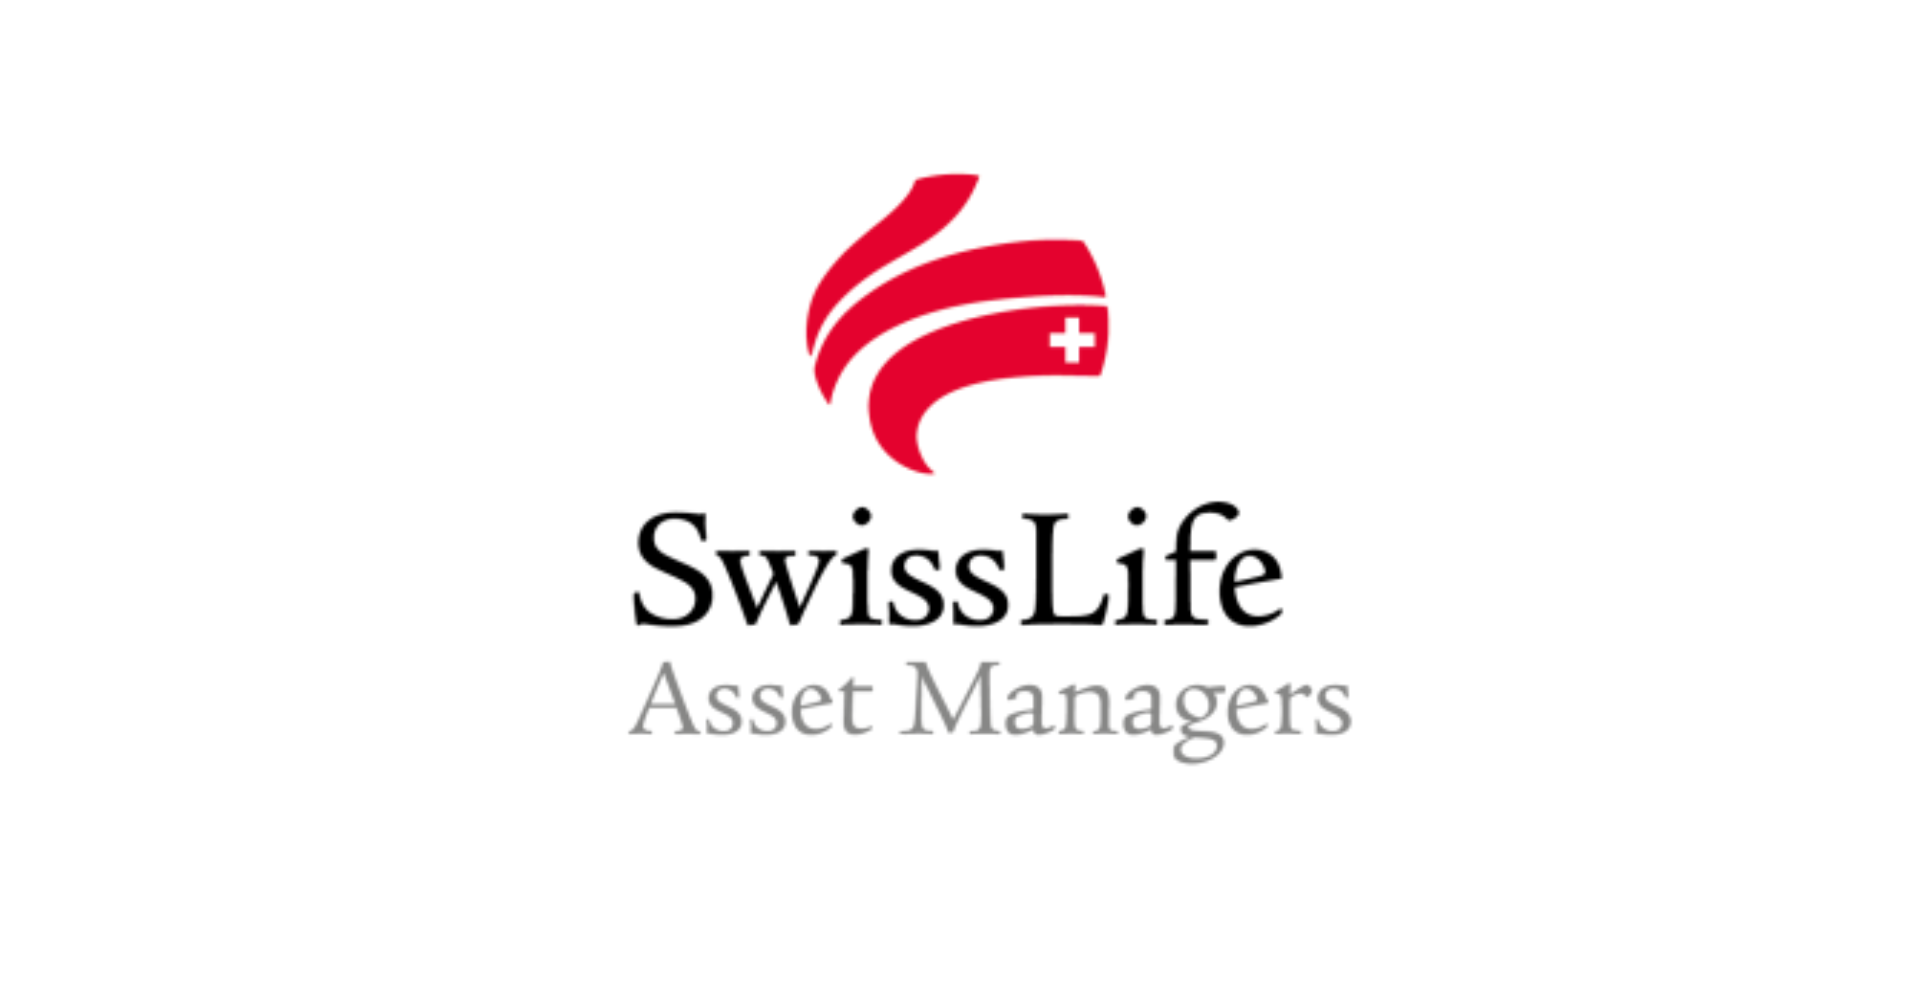 swiss life asset managers logo